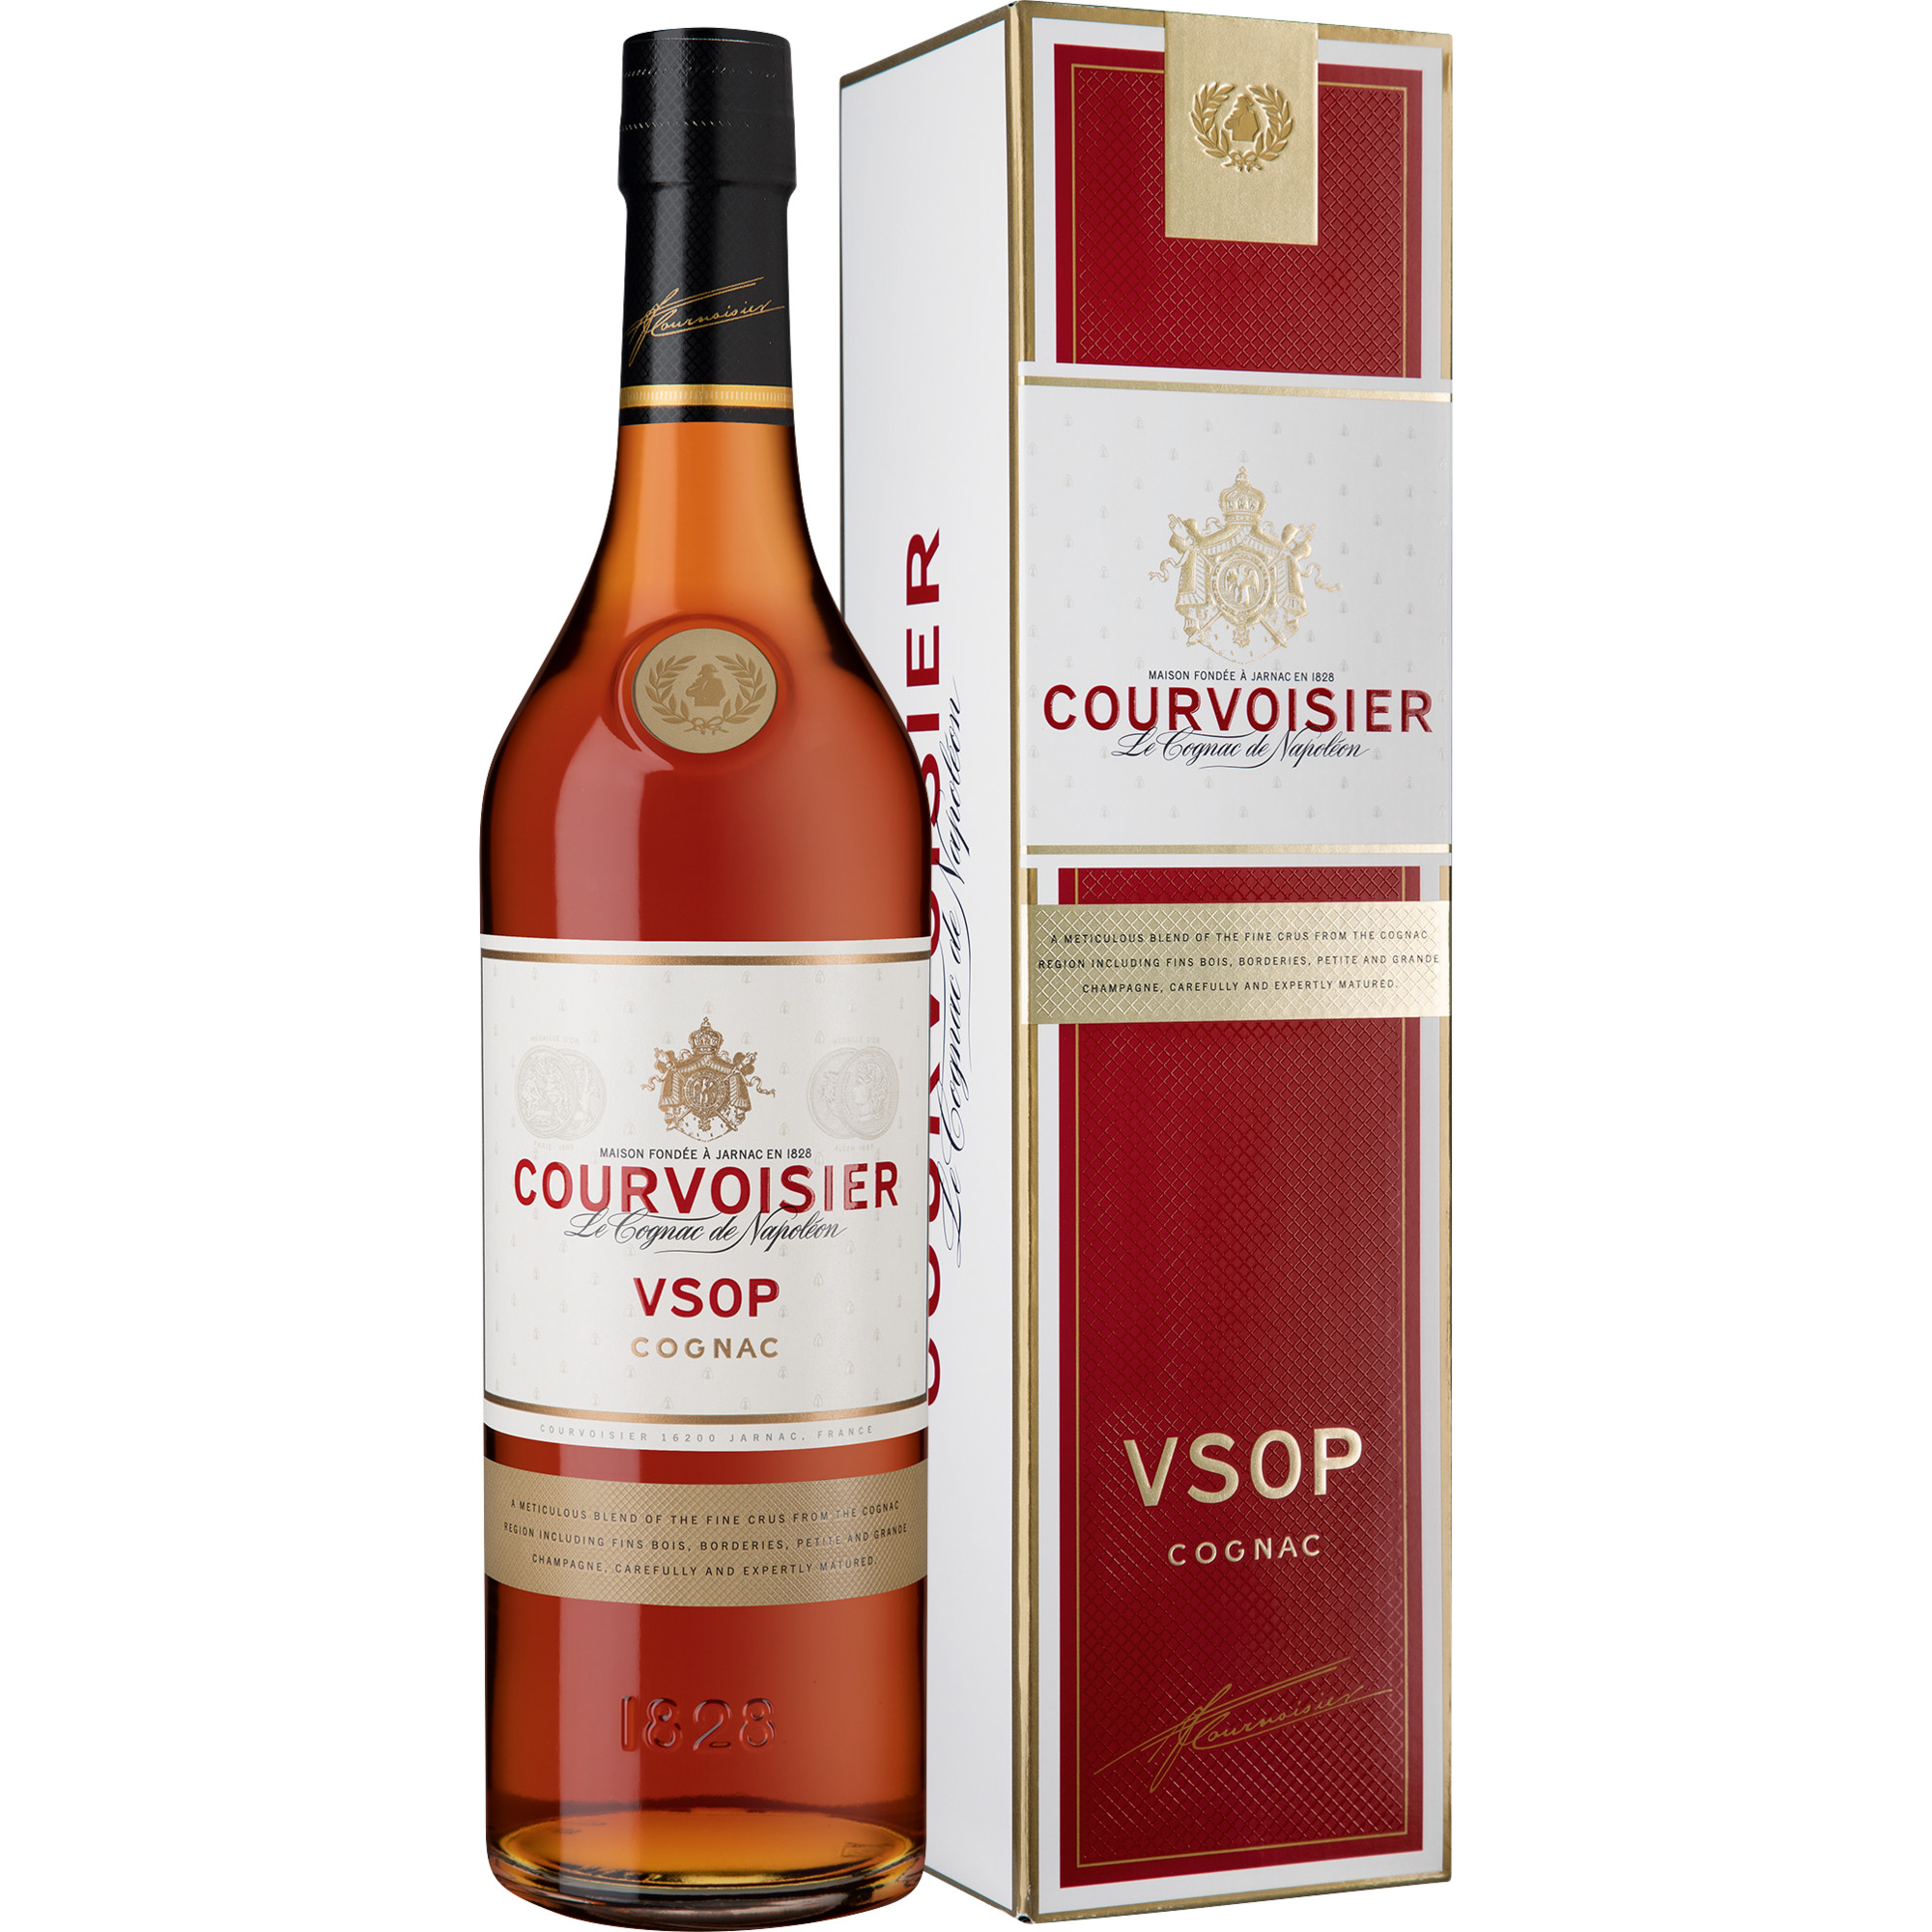 Courvoisier VSOP Cognac, Cognac AOC, 0,7 L, 40% Vol., Präsente  Präsente Hawesko